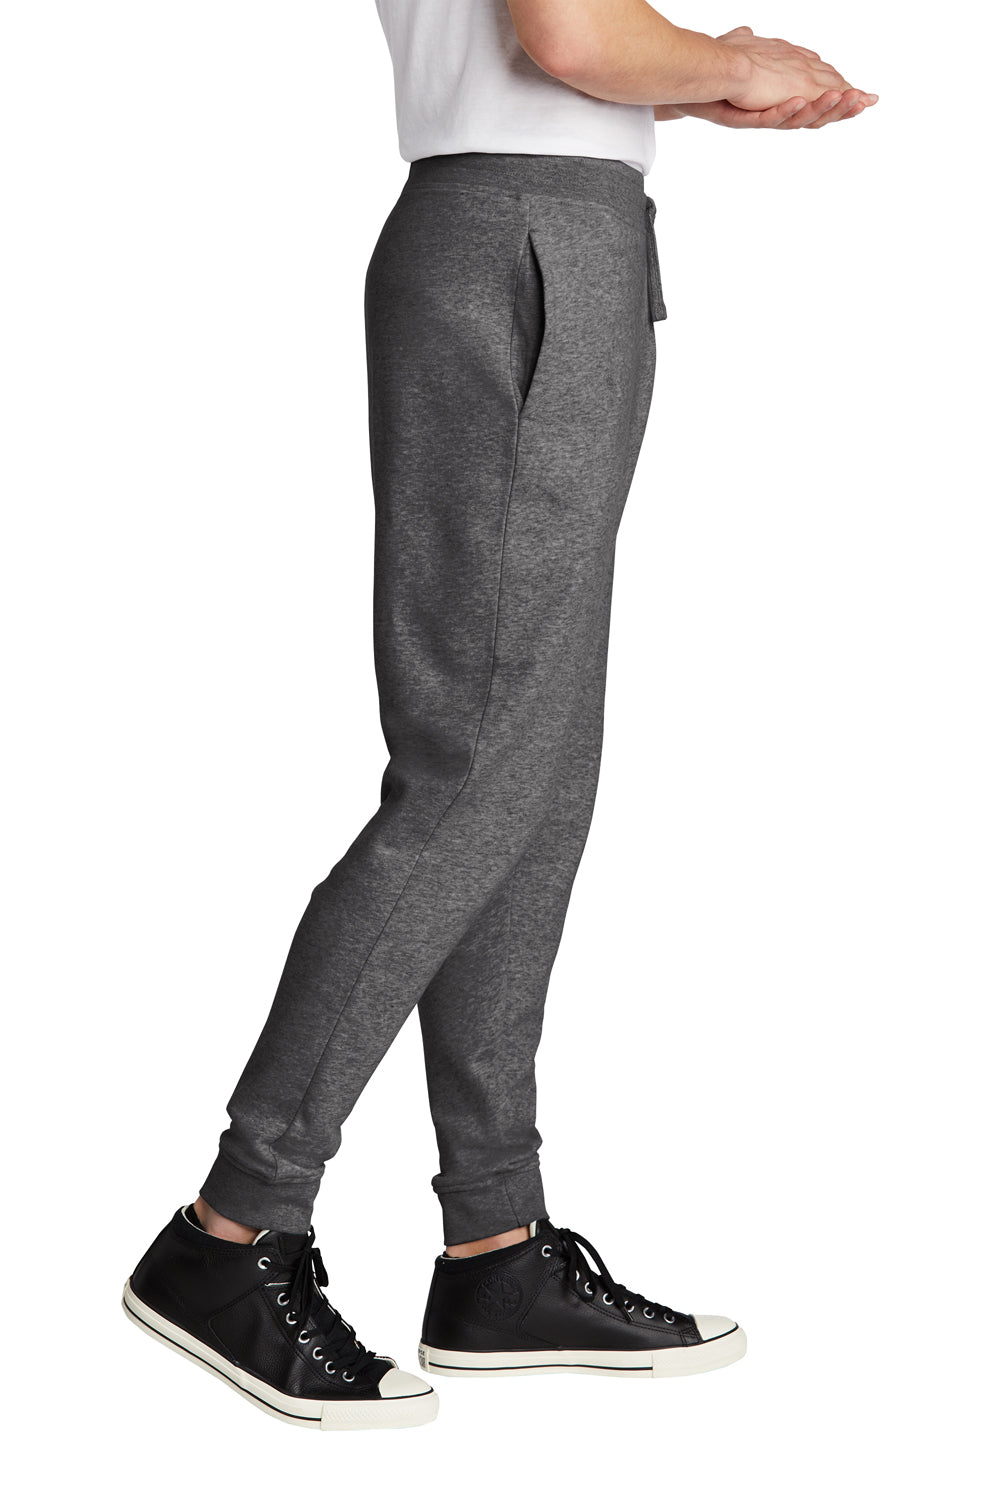 District DT6107 V.I.T. Fleece Jogger Sweatpants w/ Pockets Heathered Charcoal Grey Side